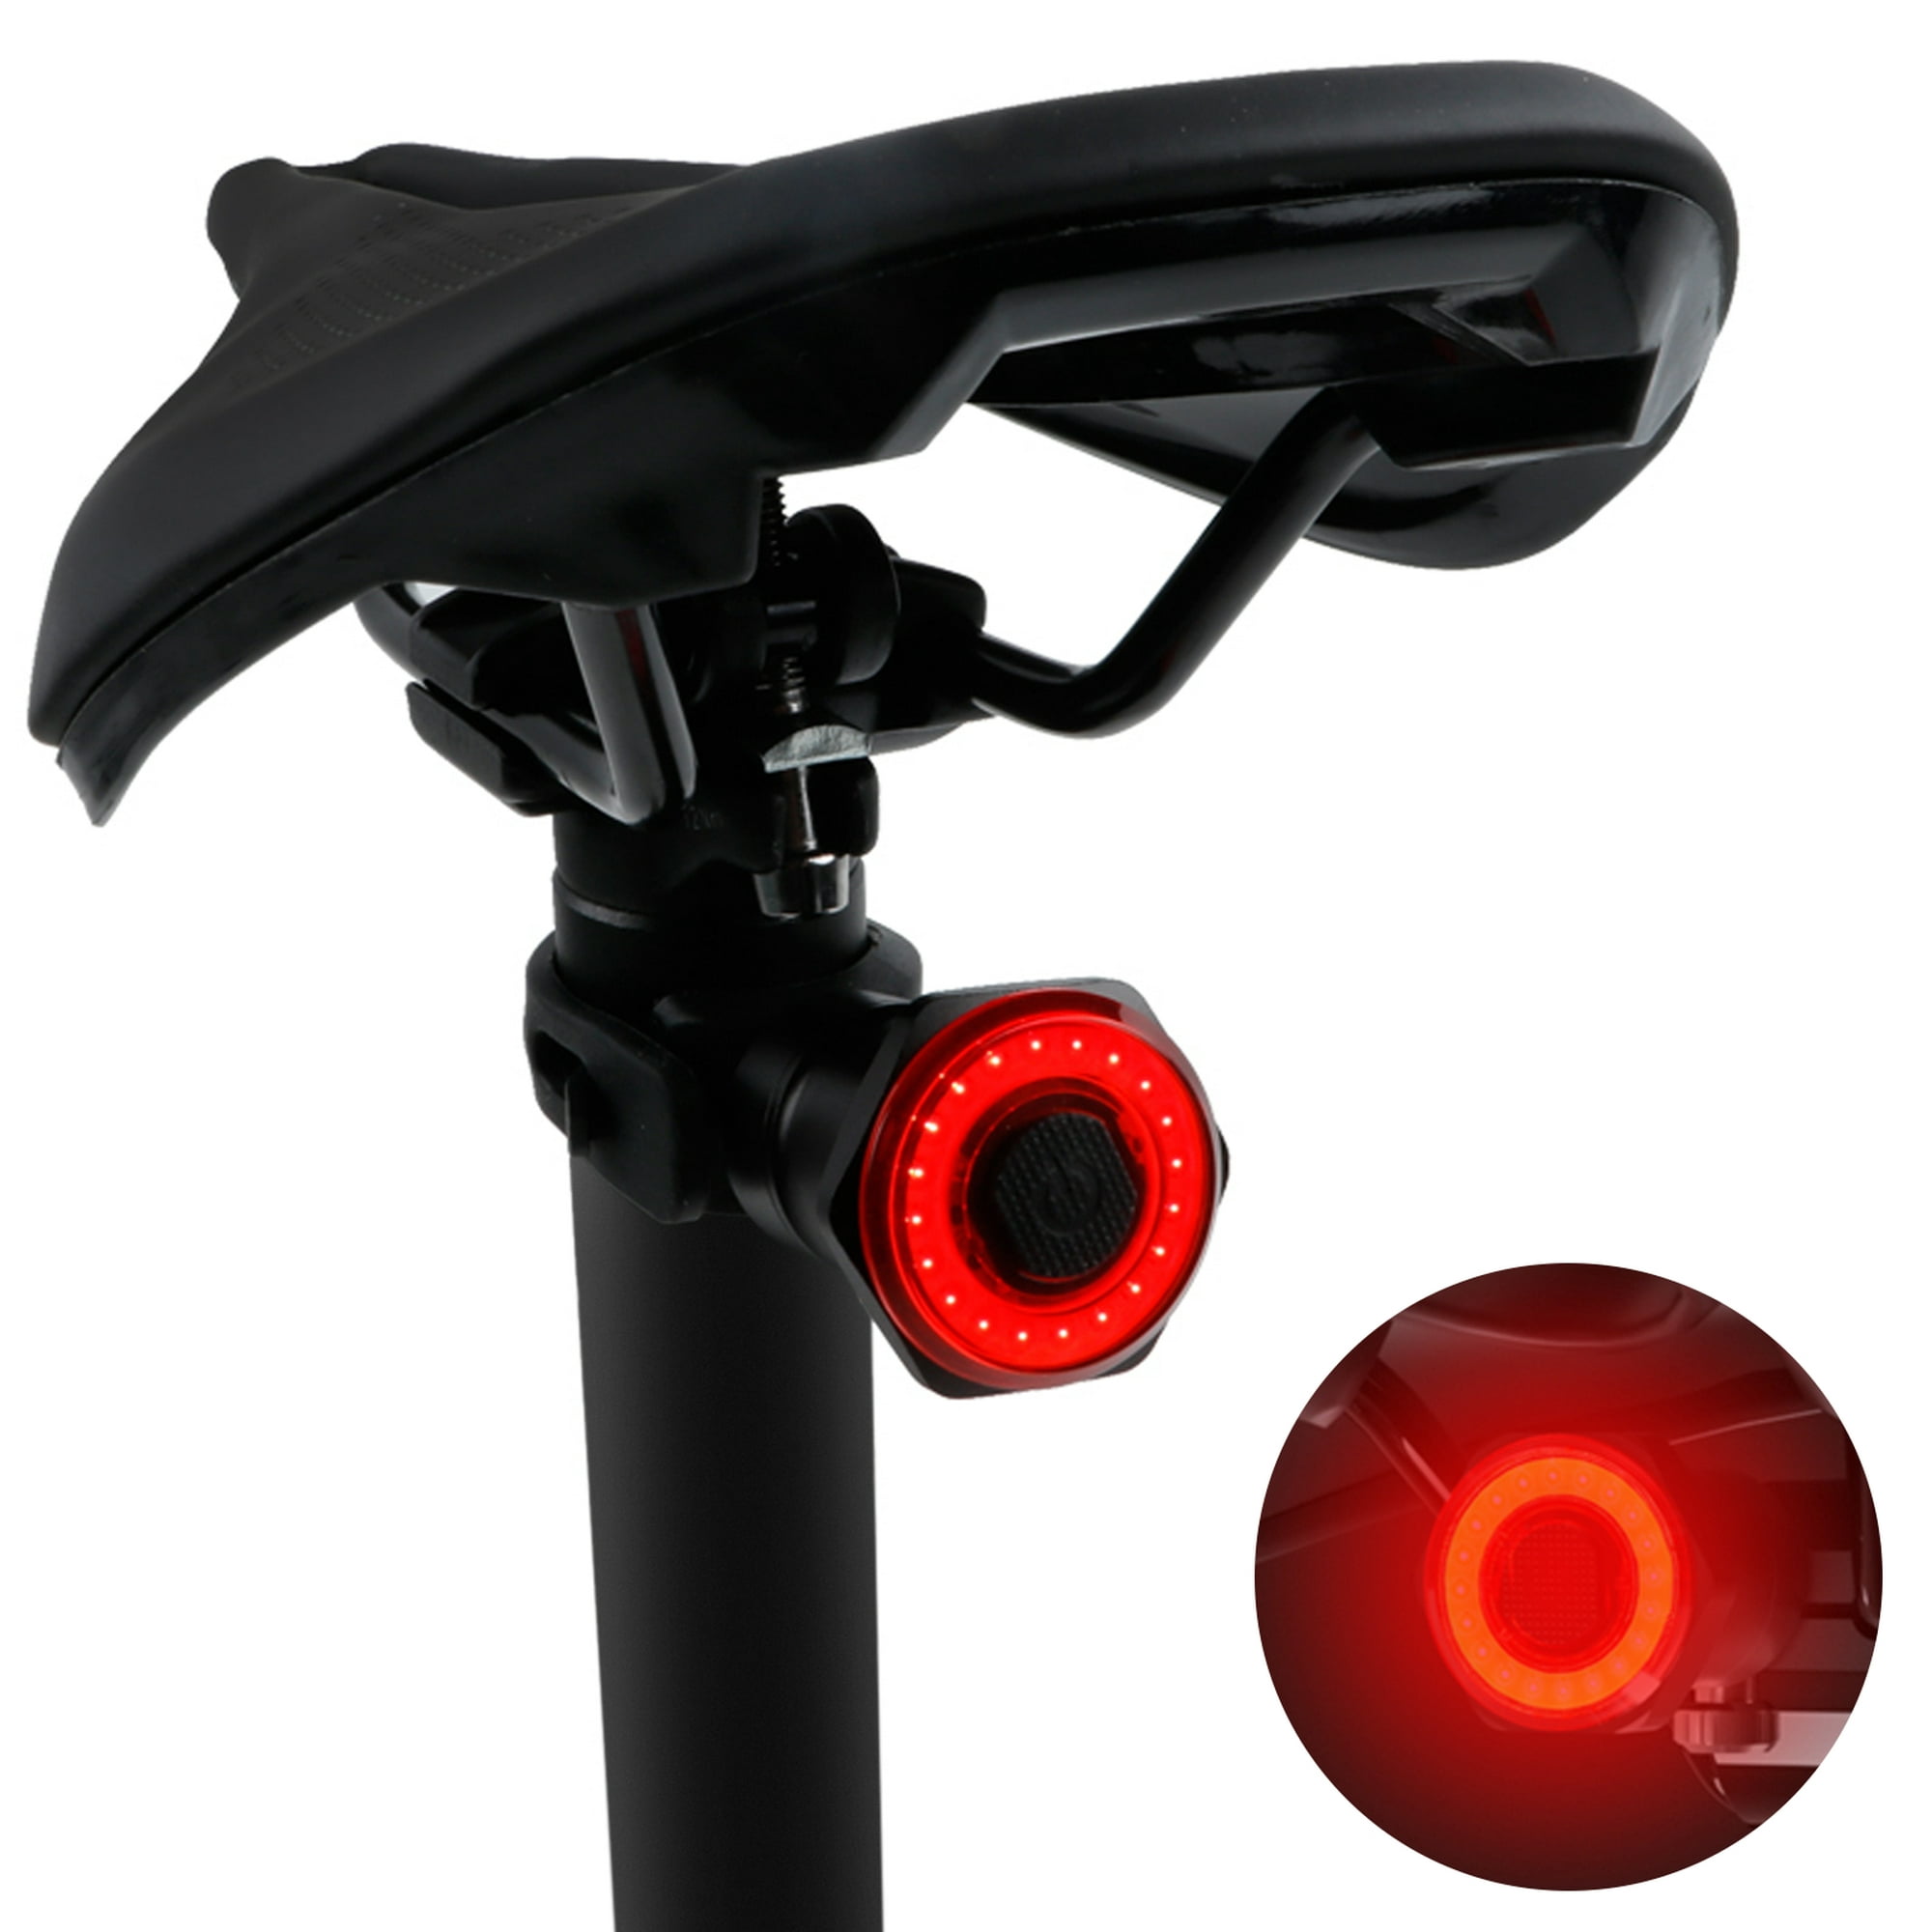 Luz trasera inteligente para bicicleta con intermitentes, luz de freno,  bocina eléctrica de advertencia, luz trasera recargable USB con 6 modos de